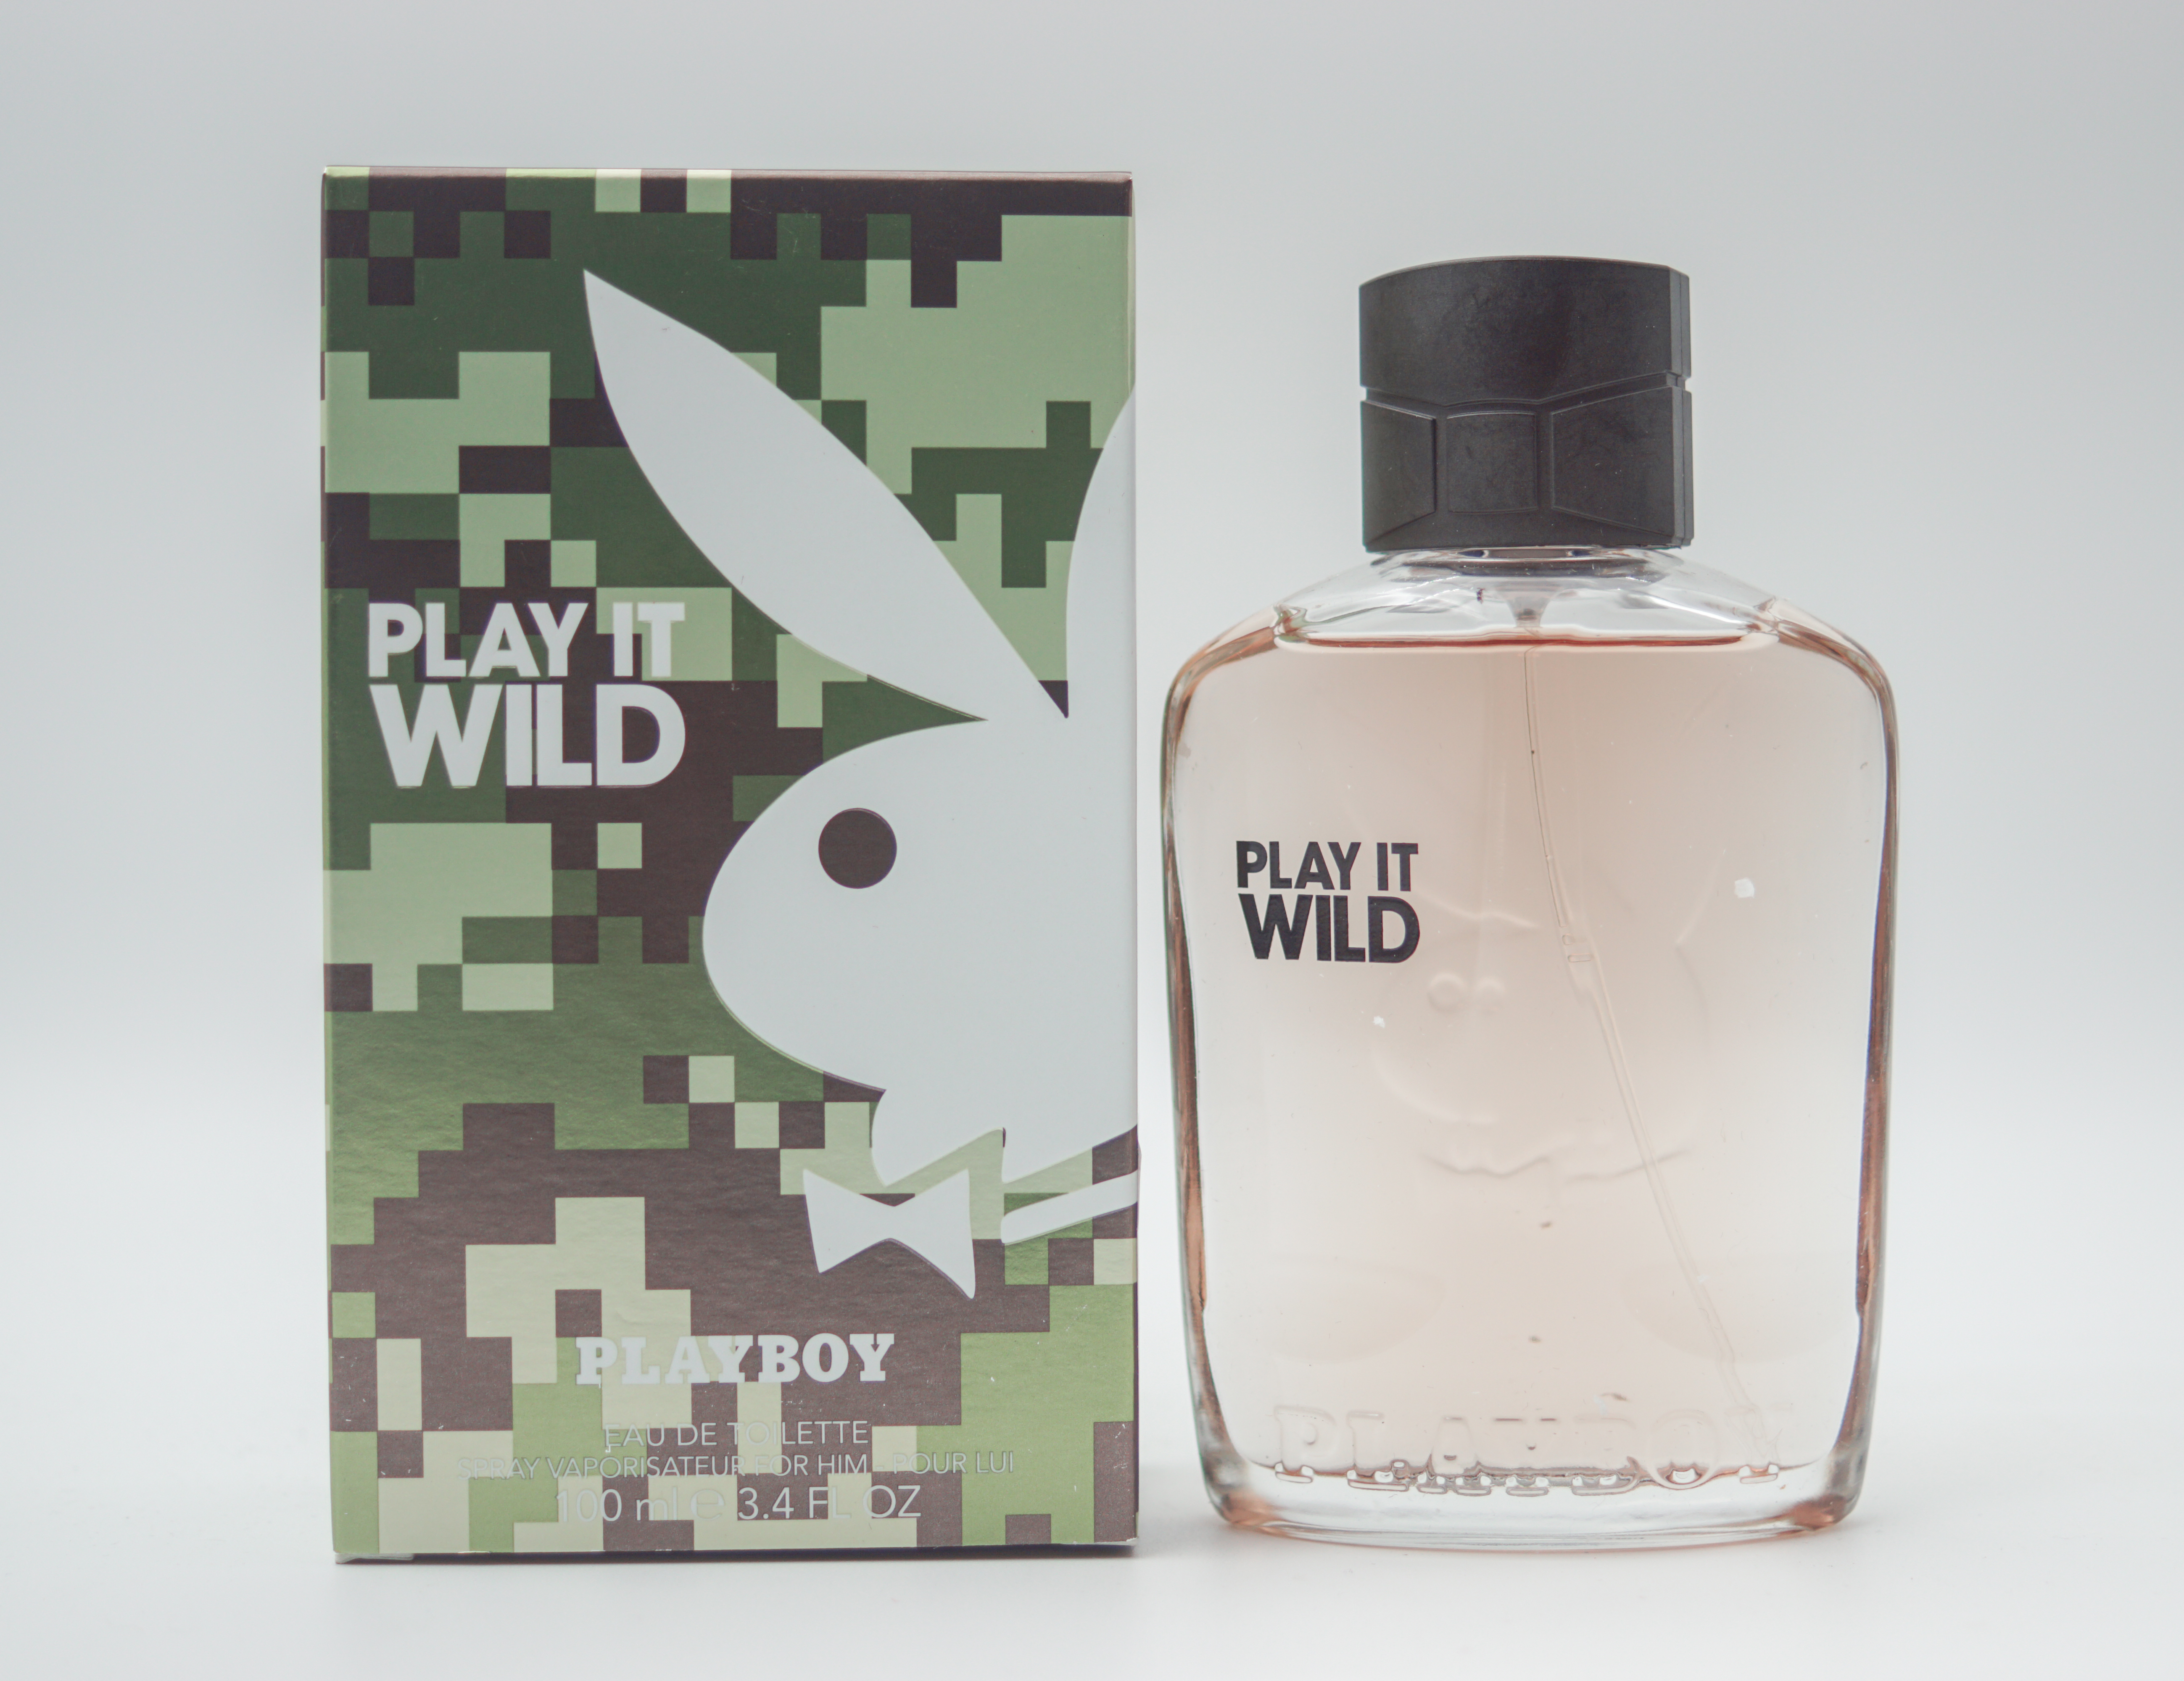 Playboy Play It Wild 100 ml Eau De Toilette Vaporisateur Spray Parfum For Men SKU 96795